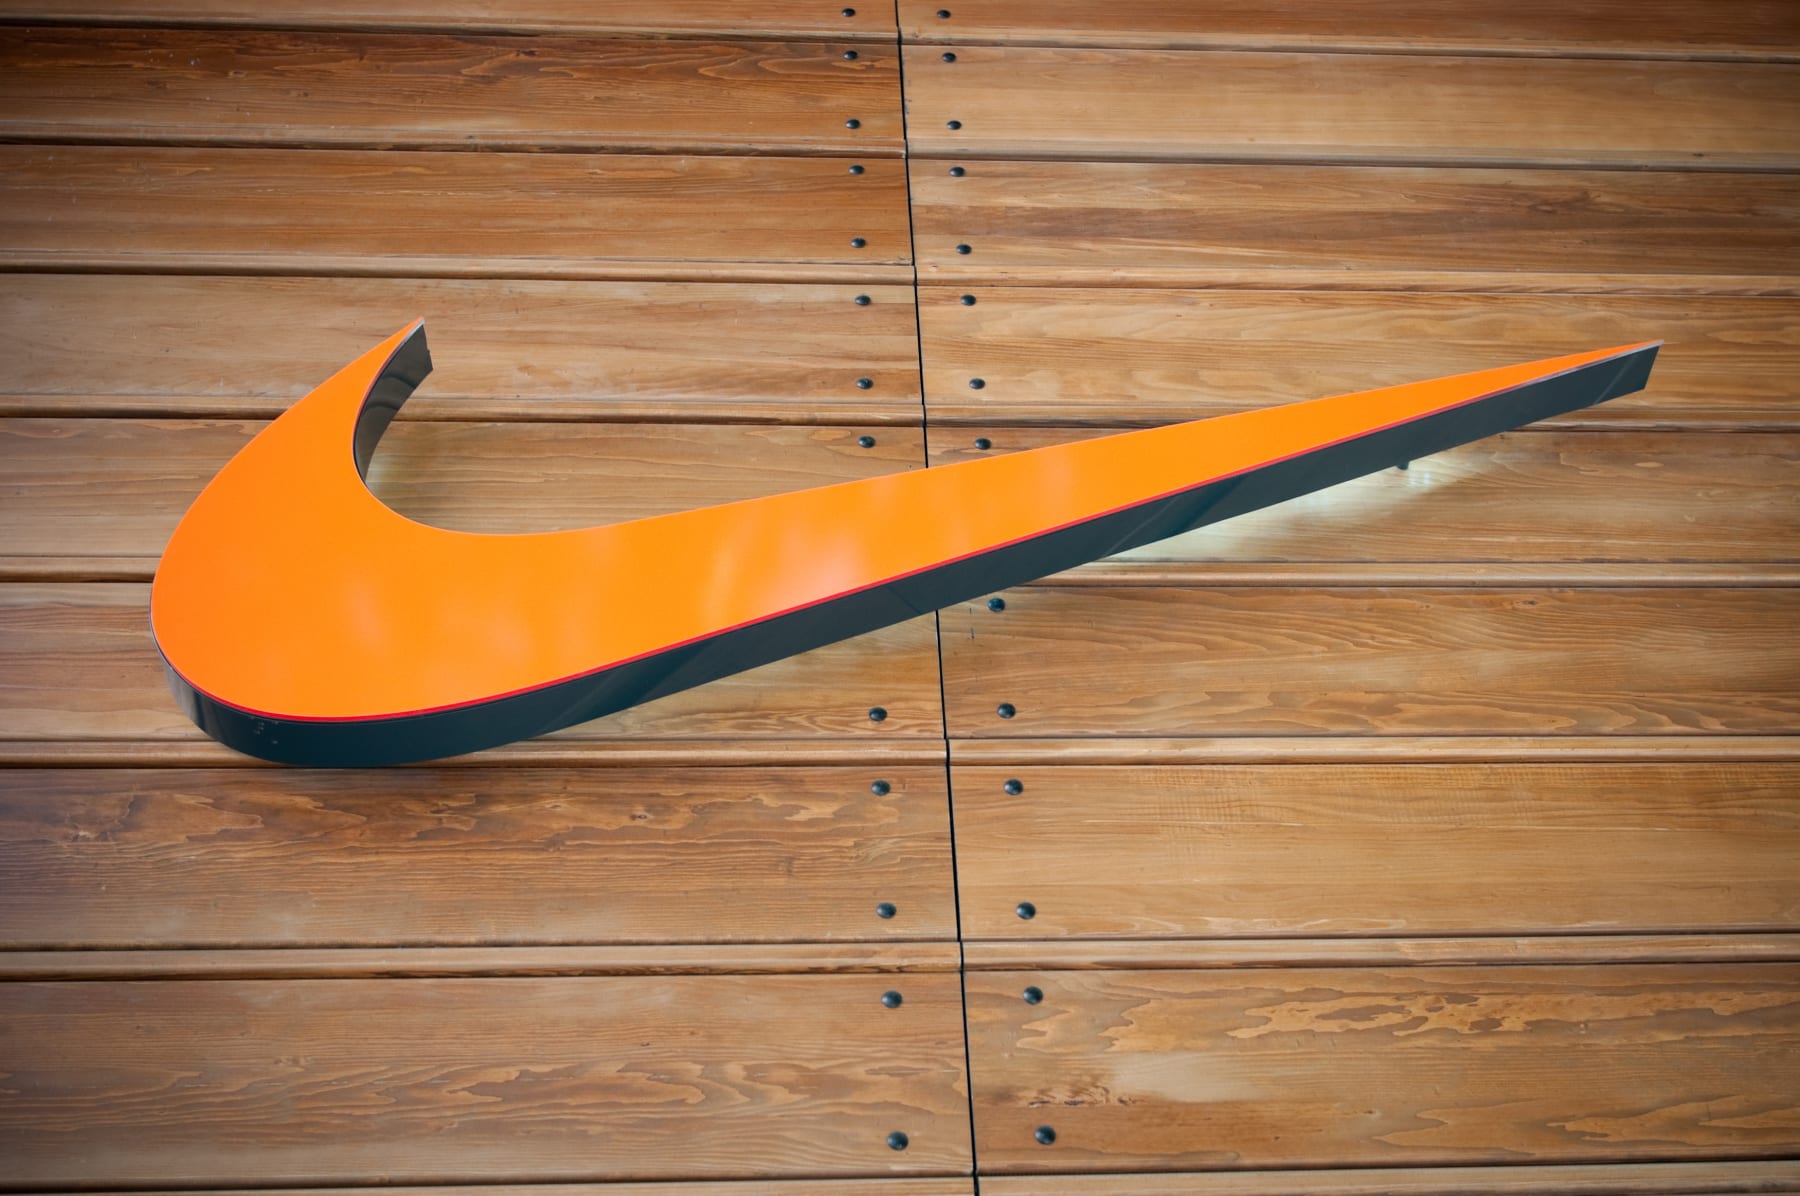 The Nike swoosh.